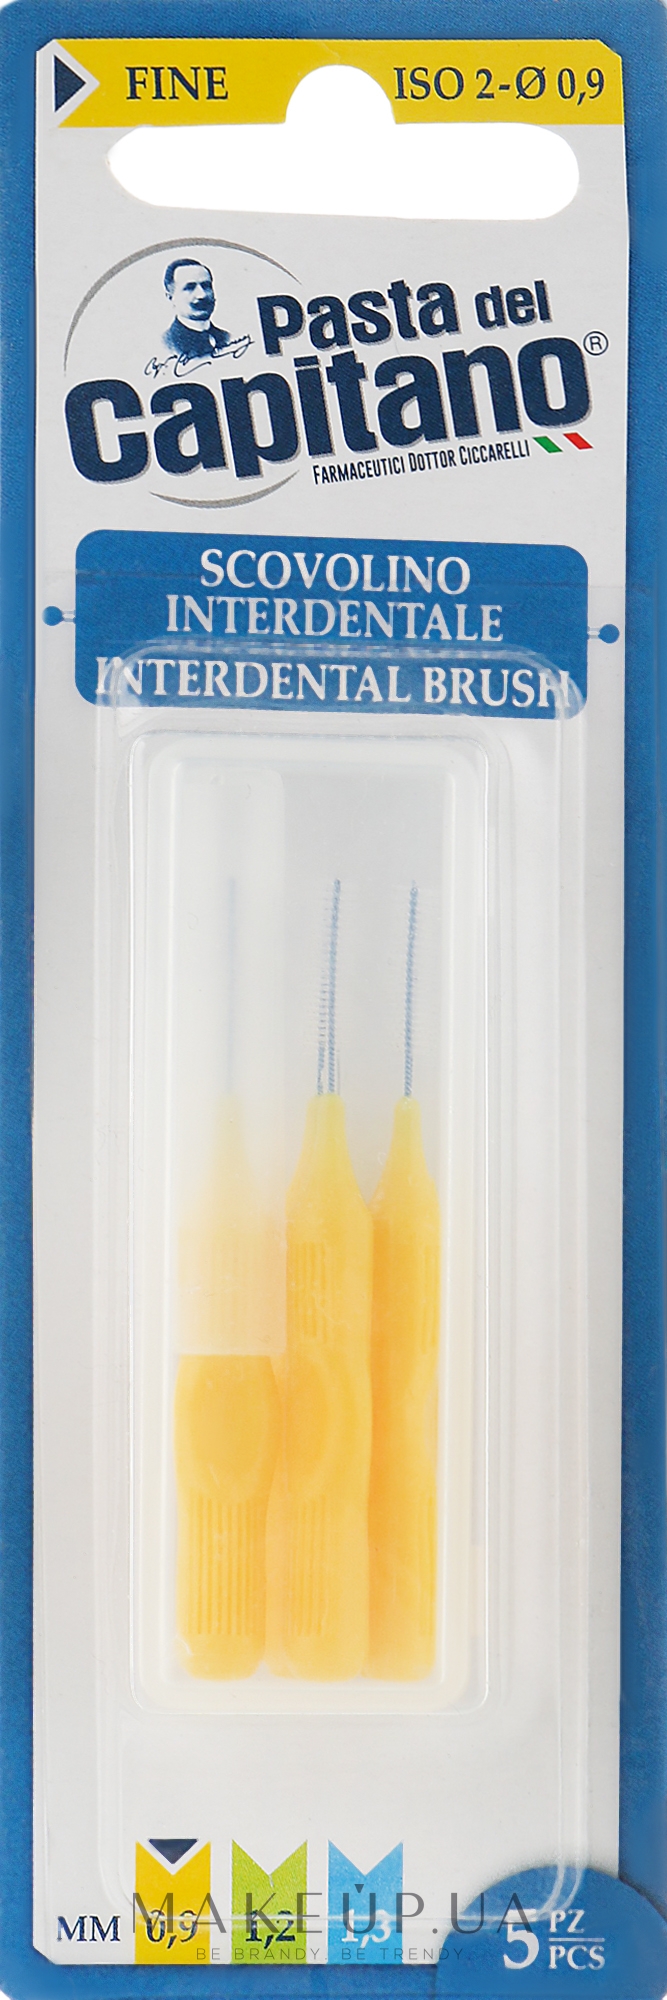 Interdental Brush Set, yellow - Pasta Del Capitano Interdental Brush Fine 0.9 mm — фото 5шт